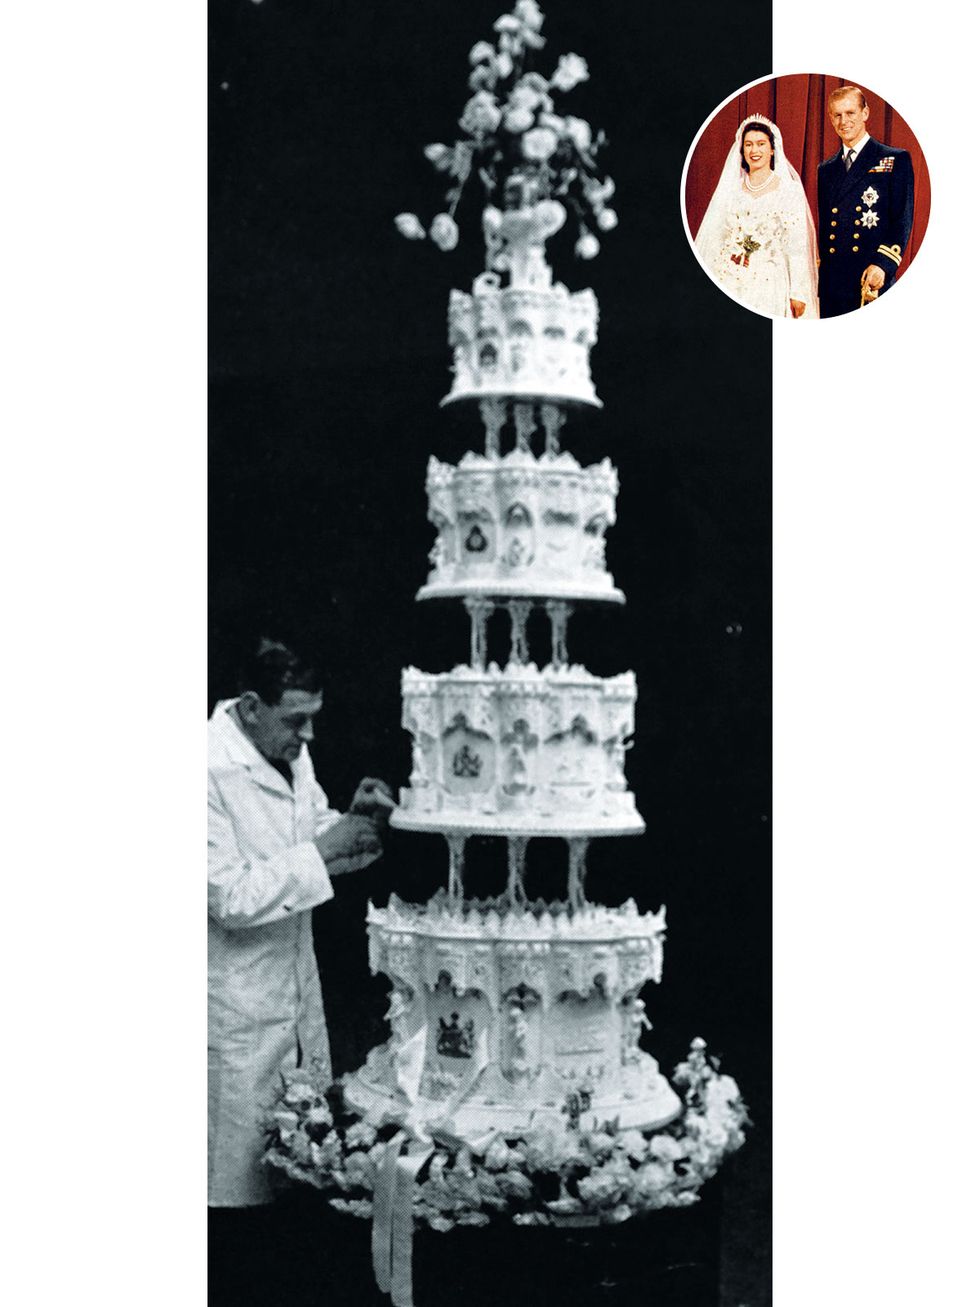 White, Cake, Monochrome photography, Cake decorating, Baked goods, Dessert, Monochrome, Wedding ceremony supply, Black-and-white, Wedding cake, 